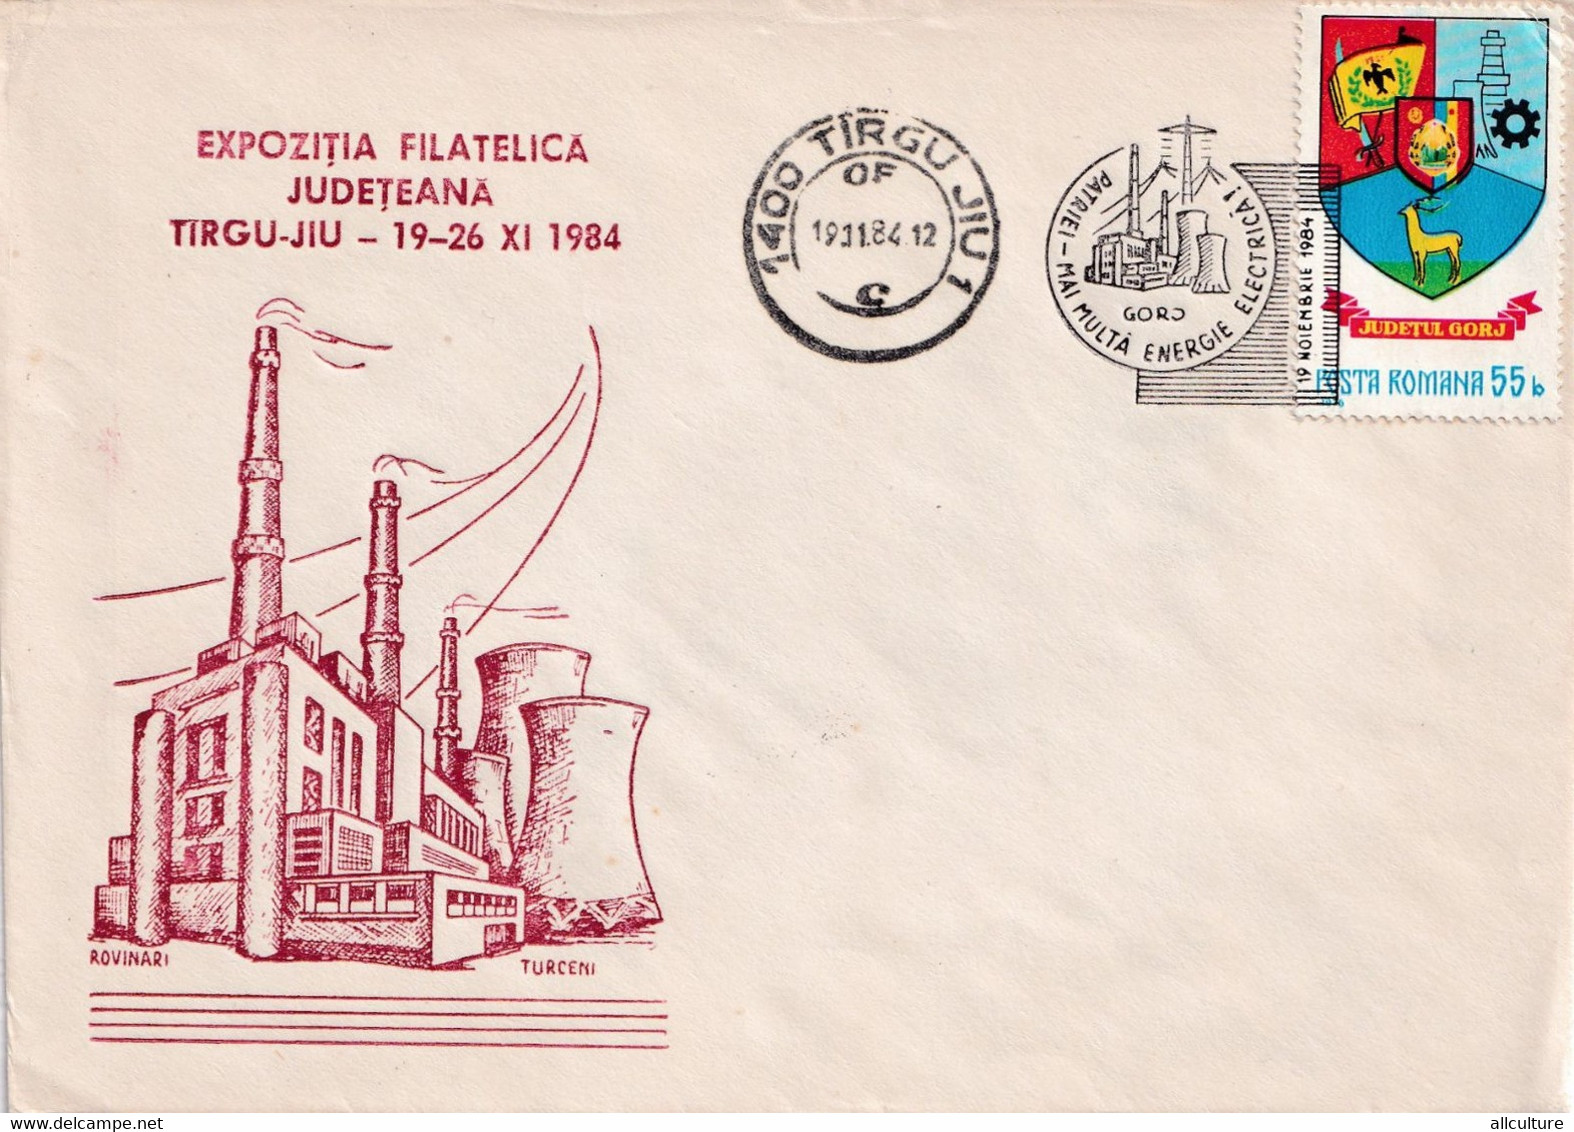 A2644 - Expozitia Filatelica Judeteana Targu-Jiu 1984, Stamp 1984 Judetul Gorj Romania - Storia Postale